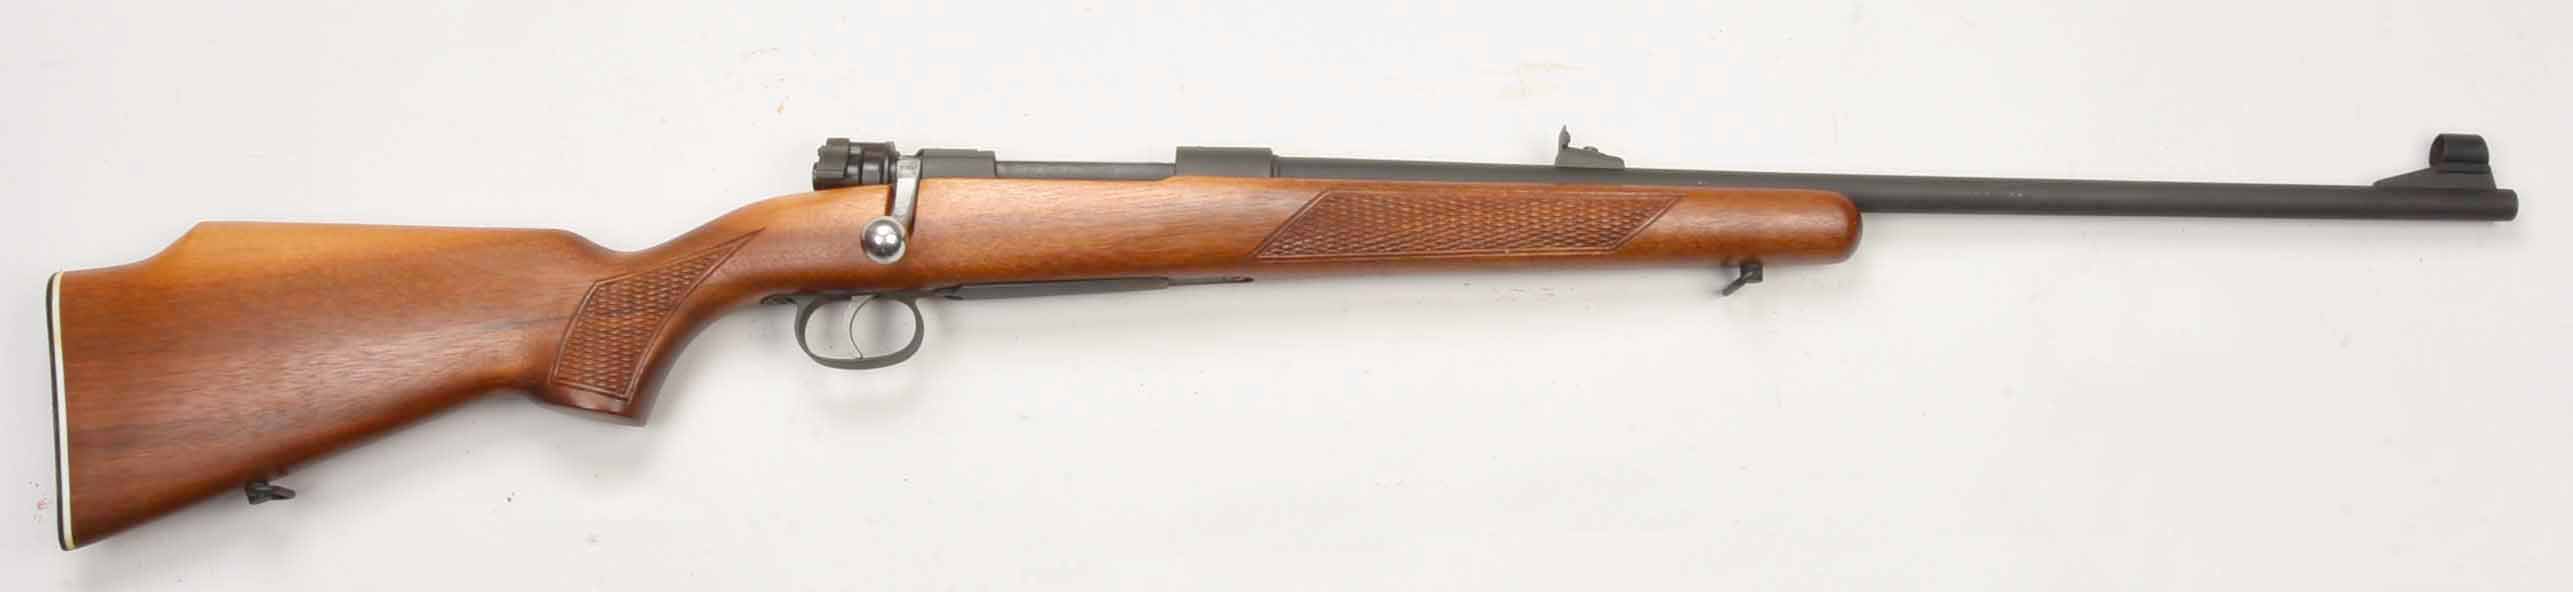 ./guns/rifle/bilder/Rifle-Kongsberg-M83-3003-1.jpg